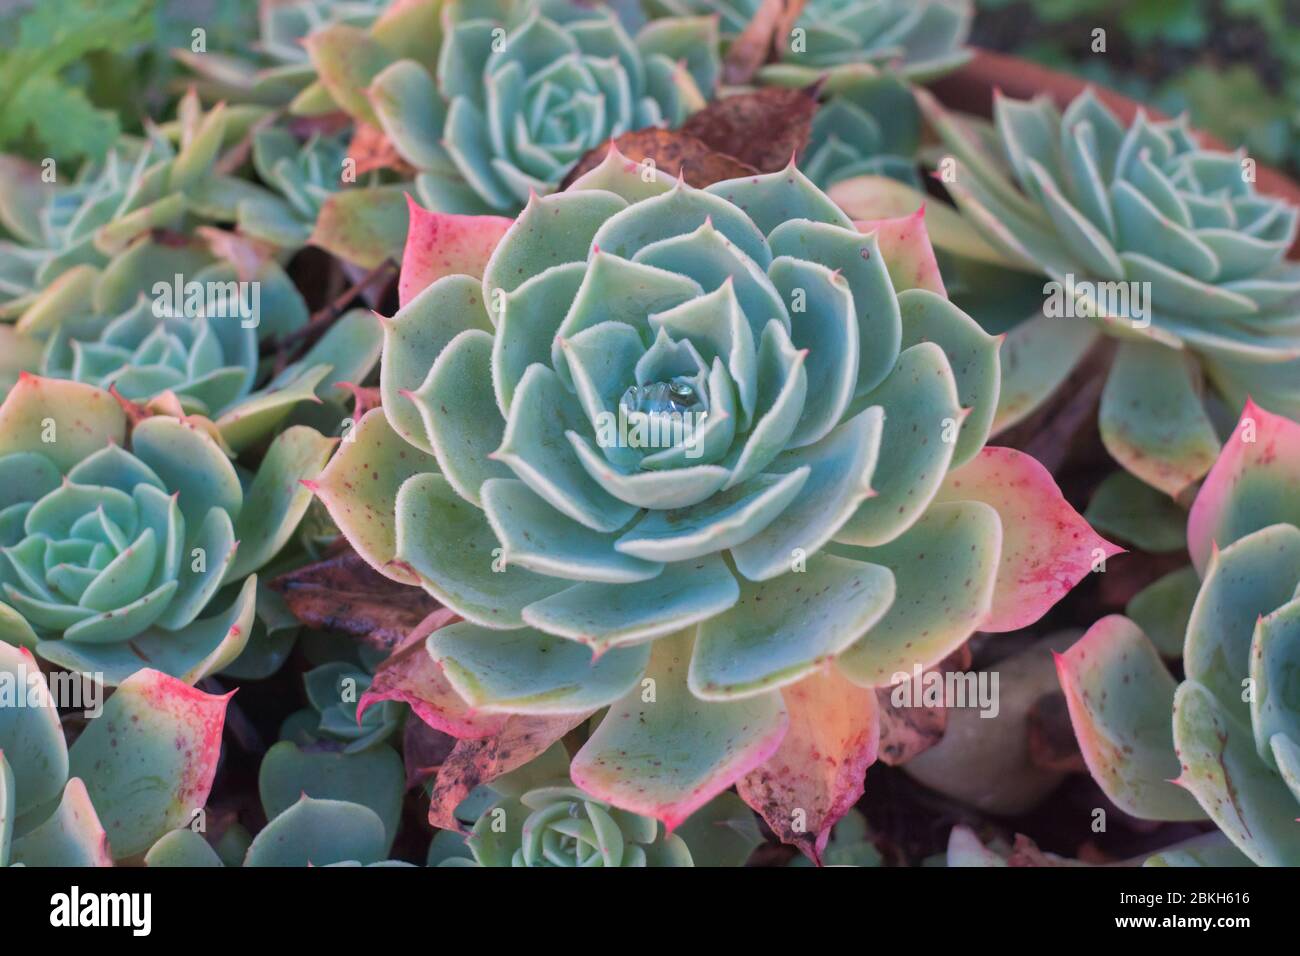 Close-up of Echeveria Elegans or Alabaster Rose, fleshy or succulent plantsZZ Stock Photo